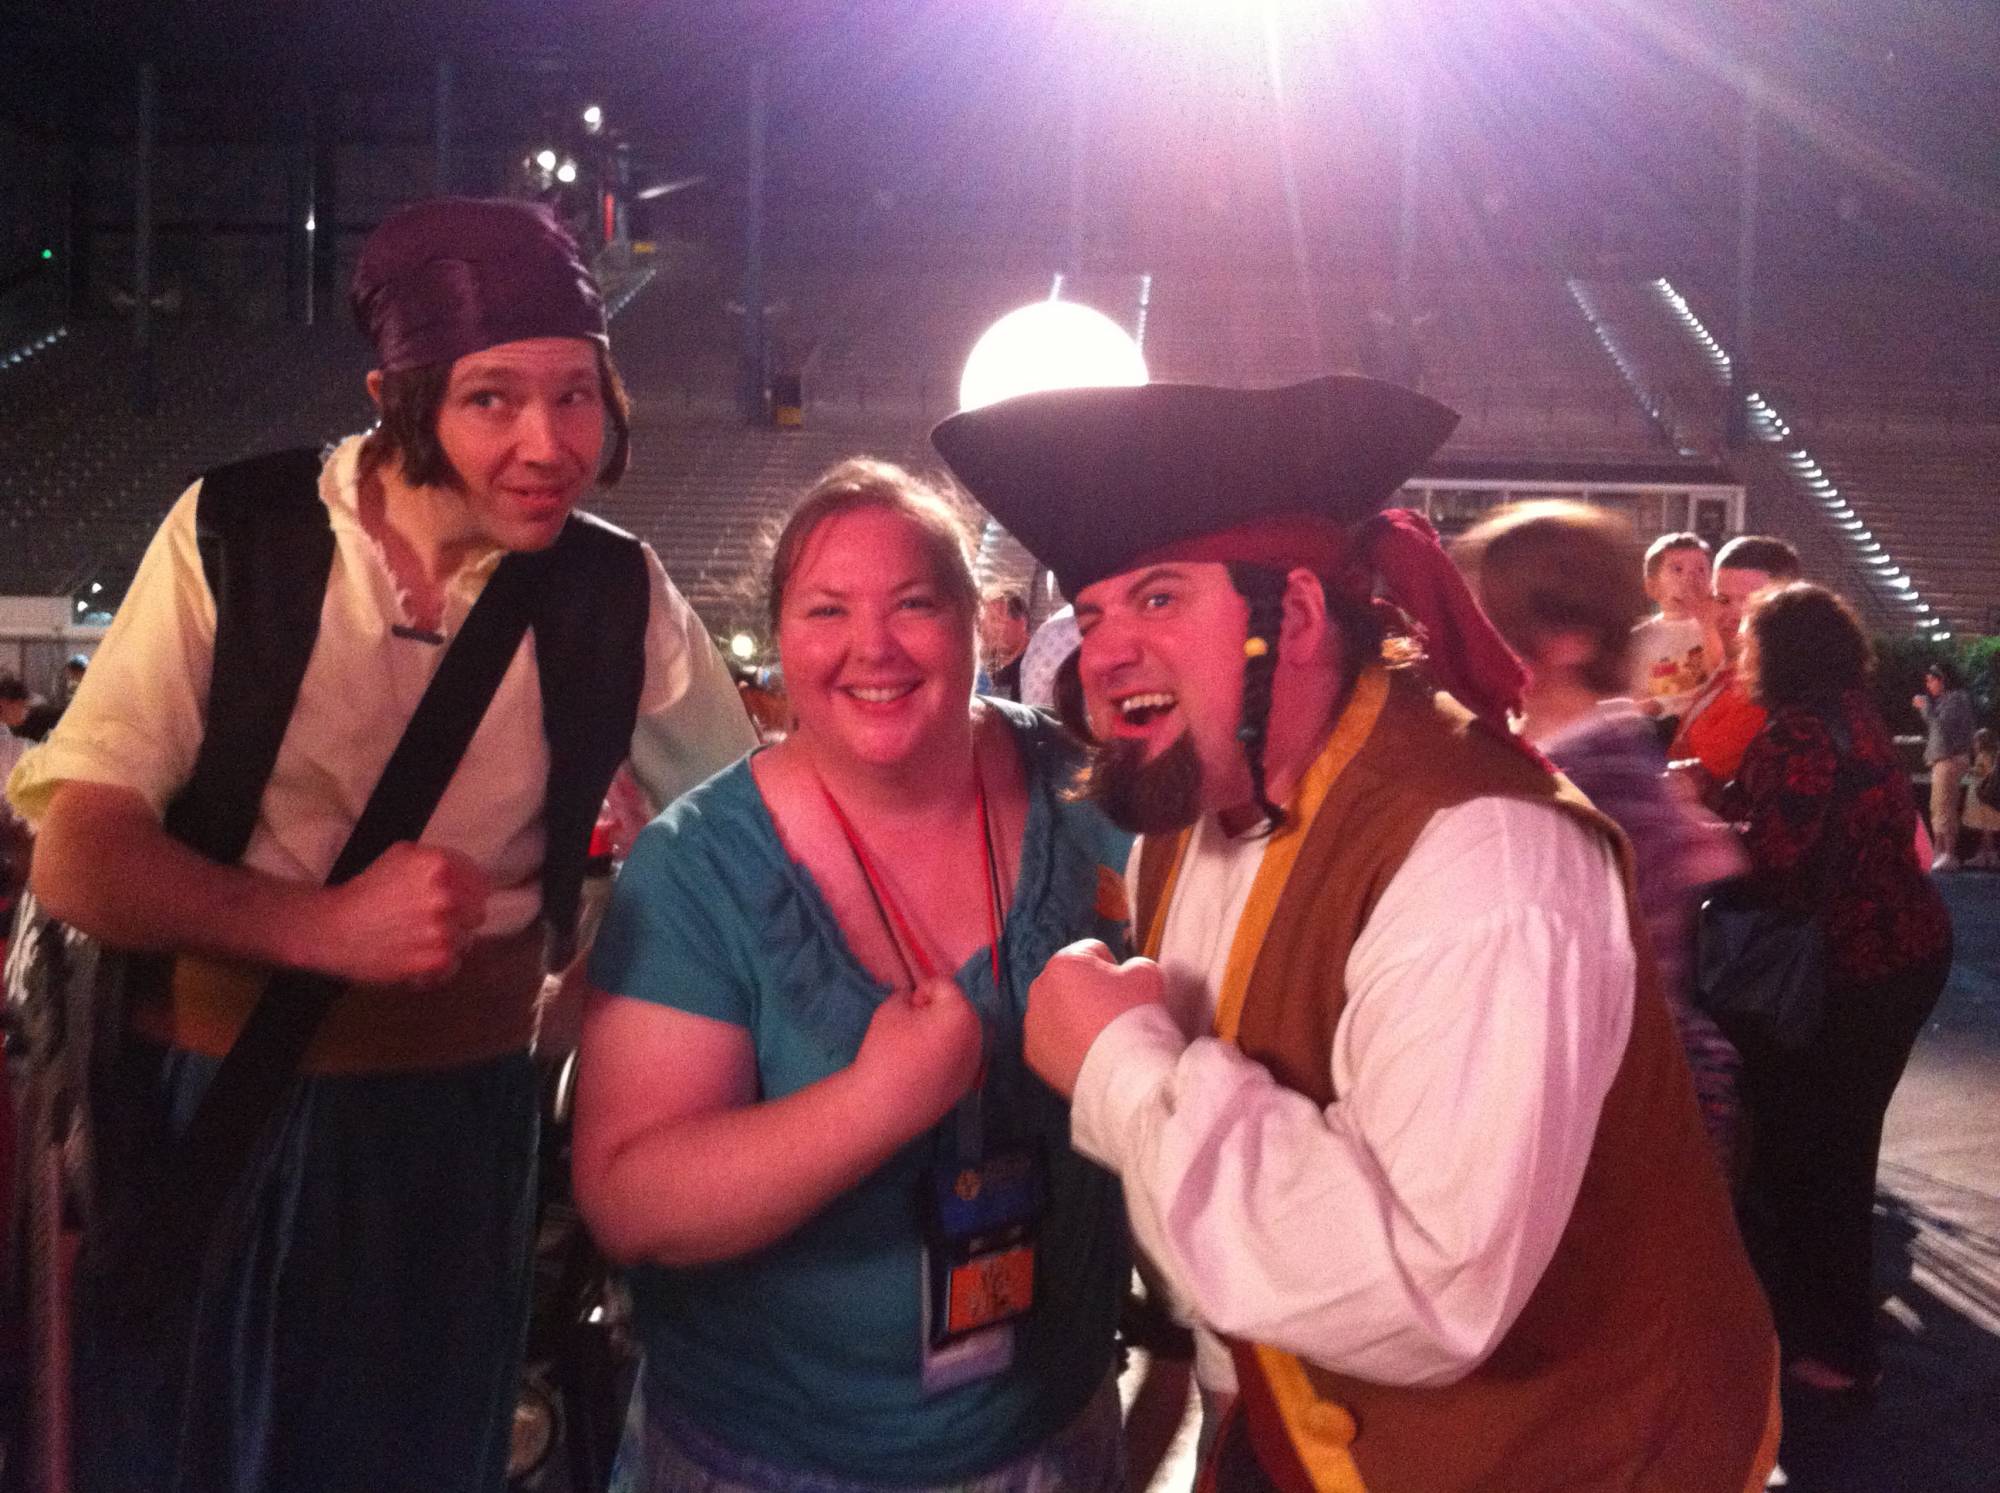 Become a pirate at the Pirate's League in the Magic Kingdom | PassPorter.com